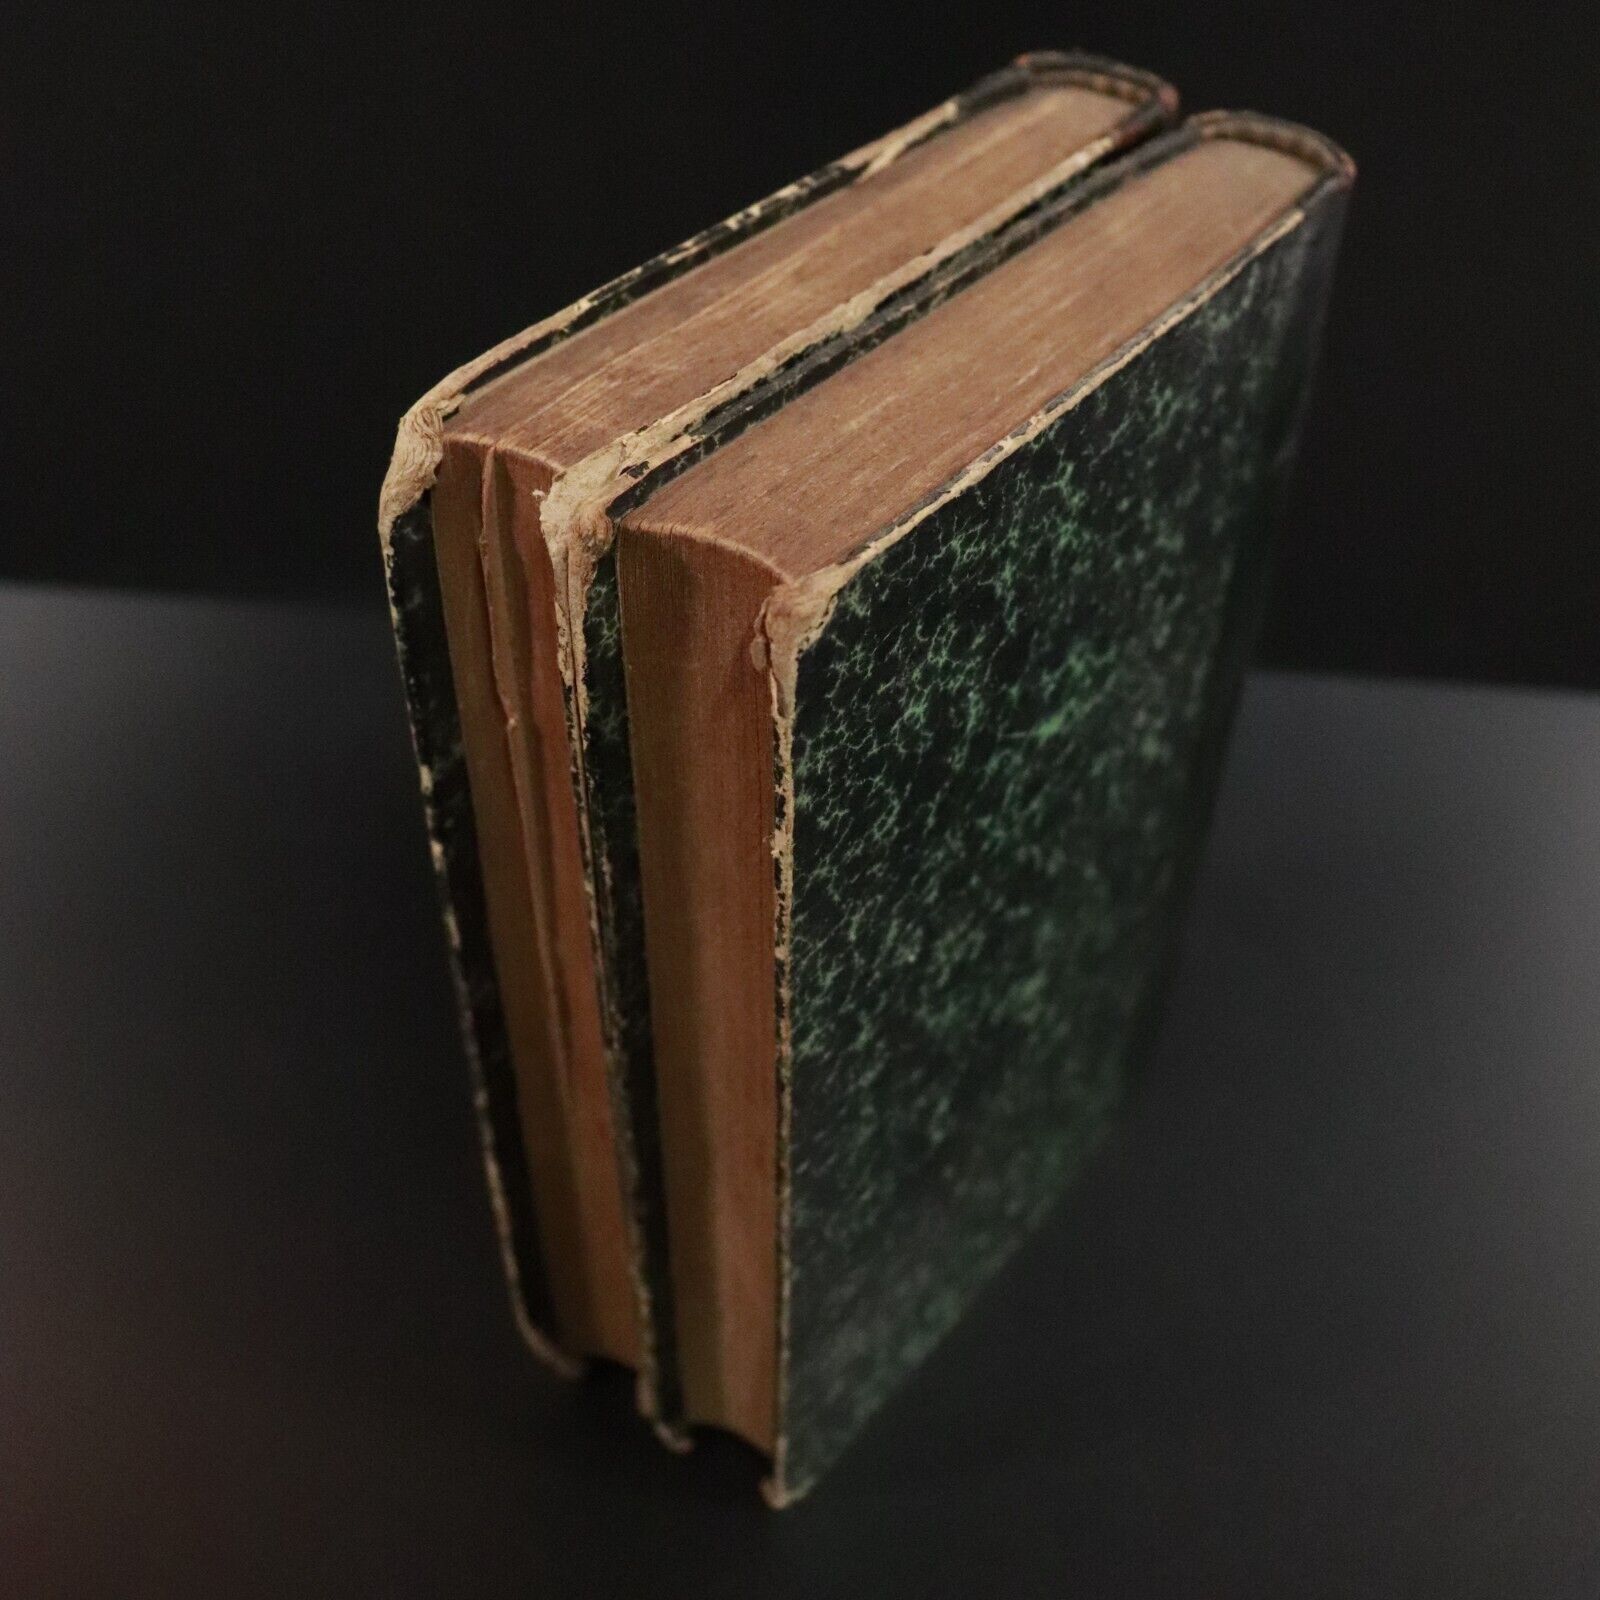 c1880 2vol Ange Pitou by Alexandre Dumas Antiquarian French Fiction Books